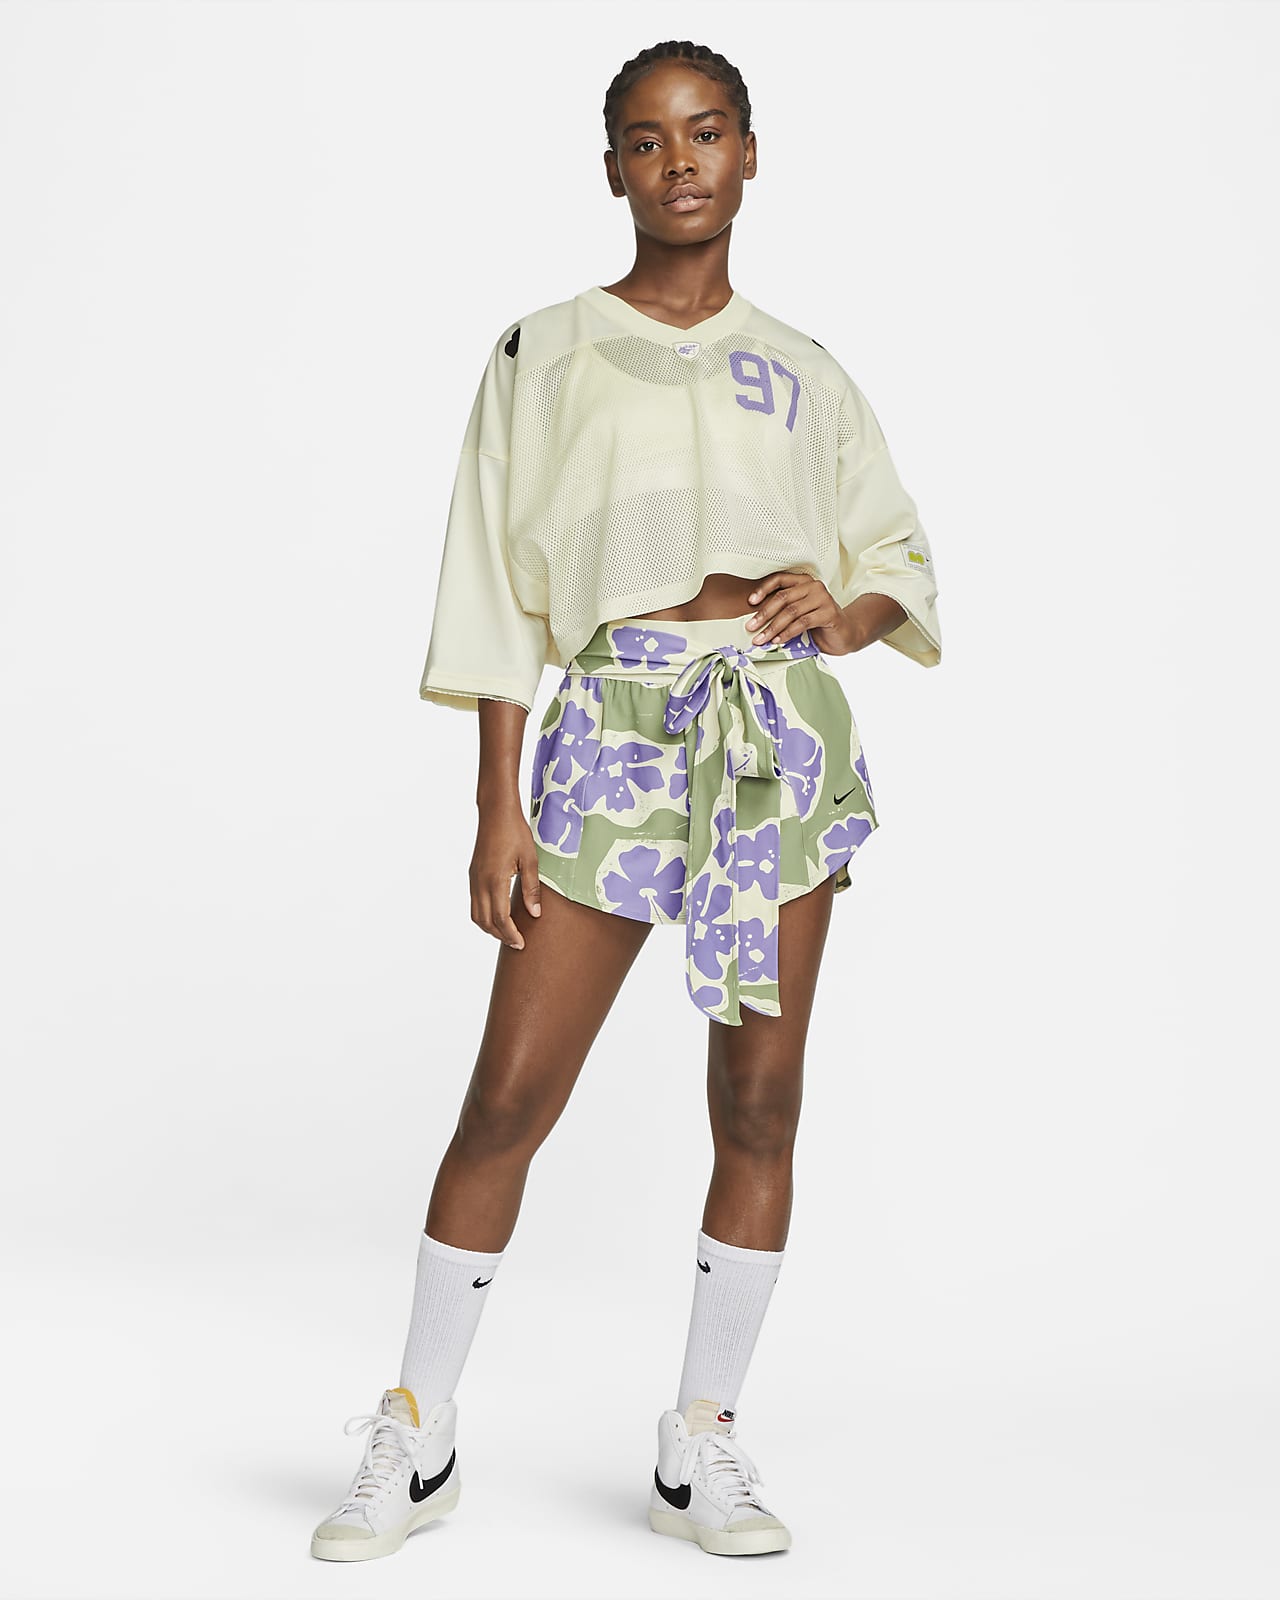 Naomi Osaka Women's Printed Shorts